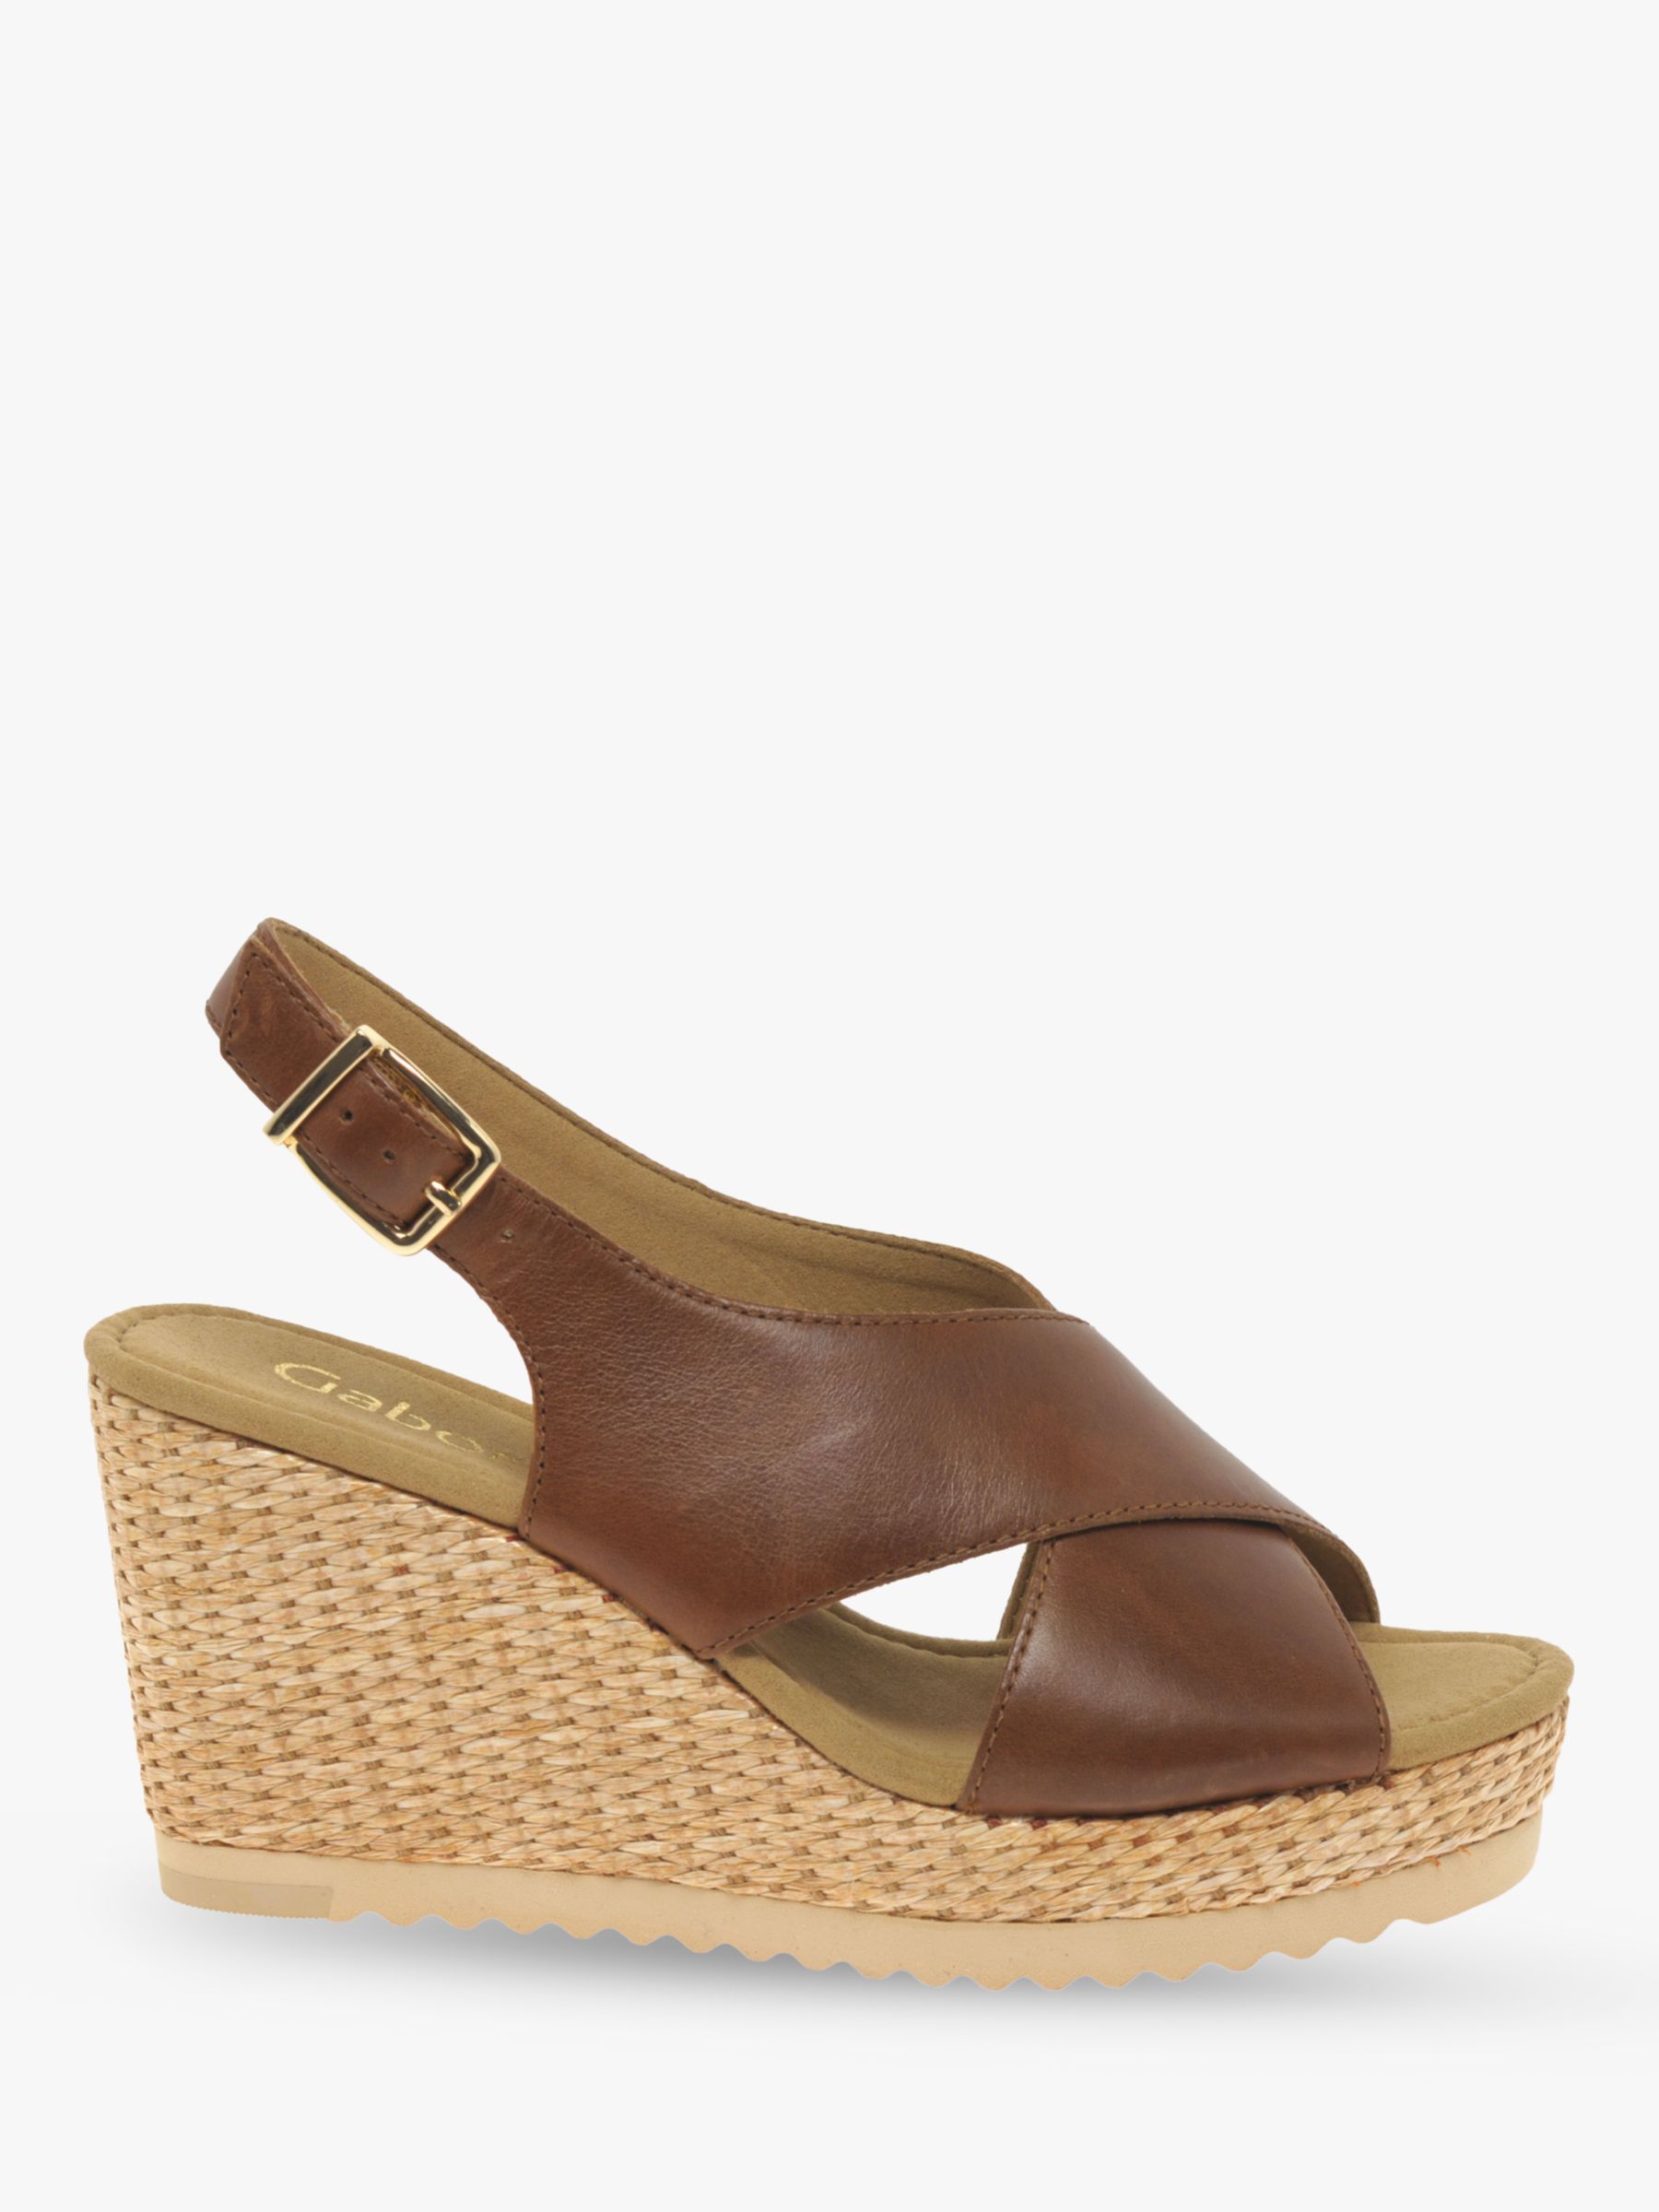 Gabor Warbler Leather Wedge Heel Sandals, Brown